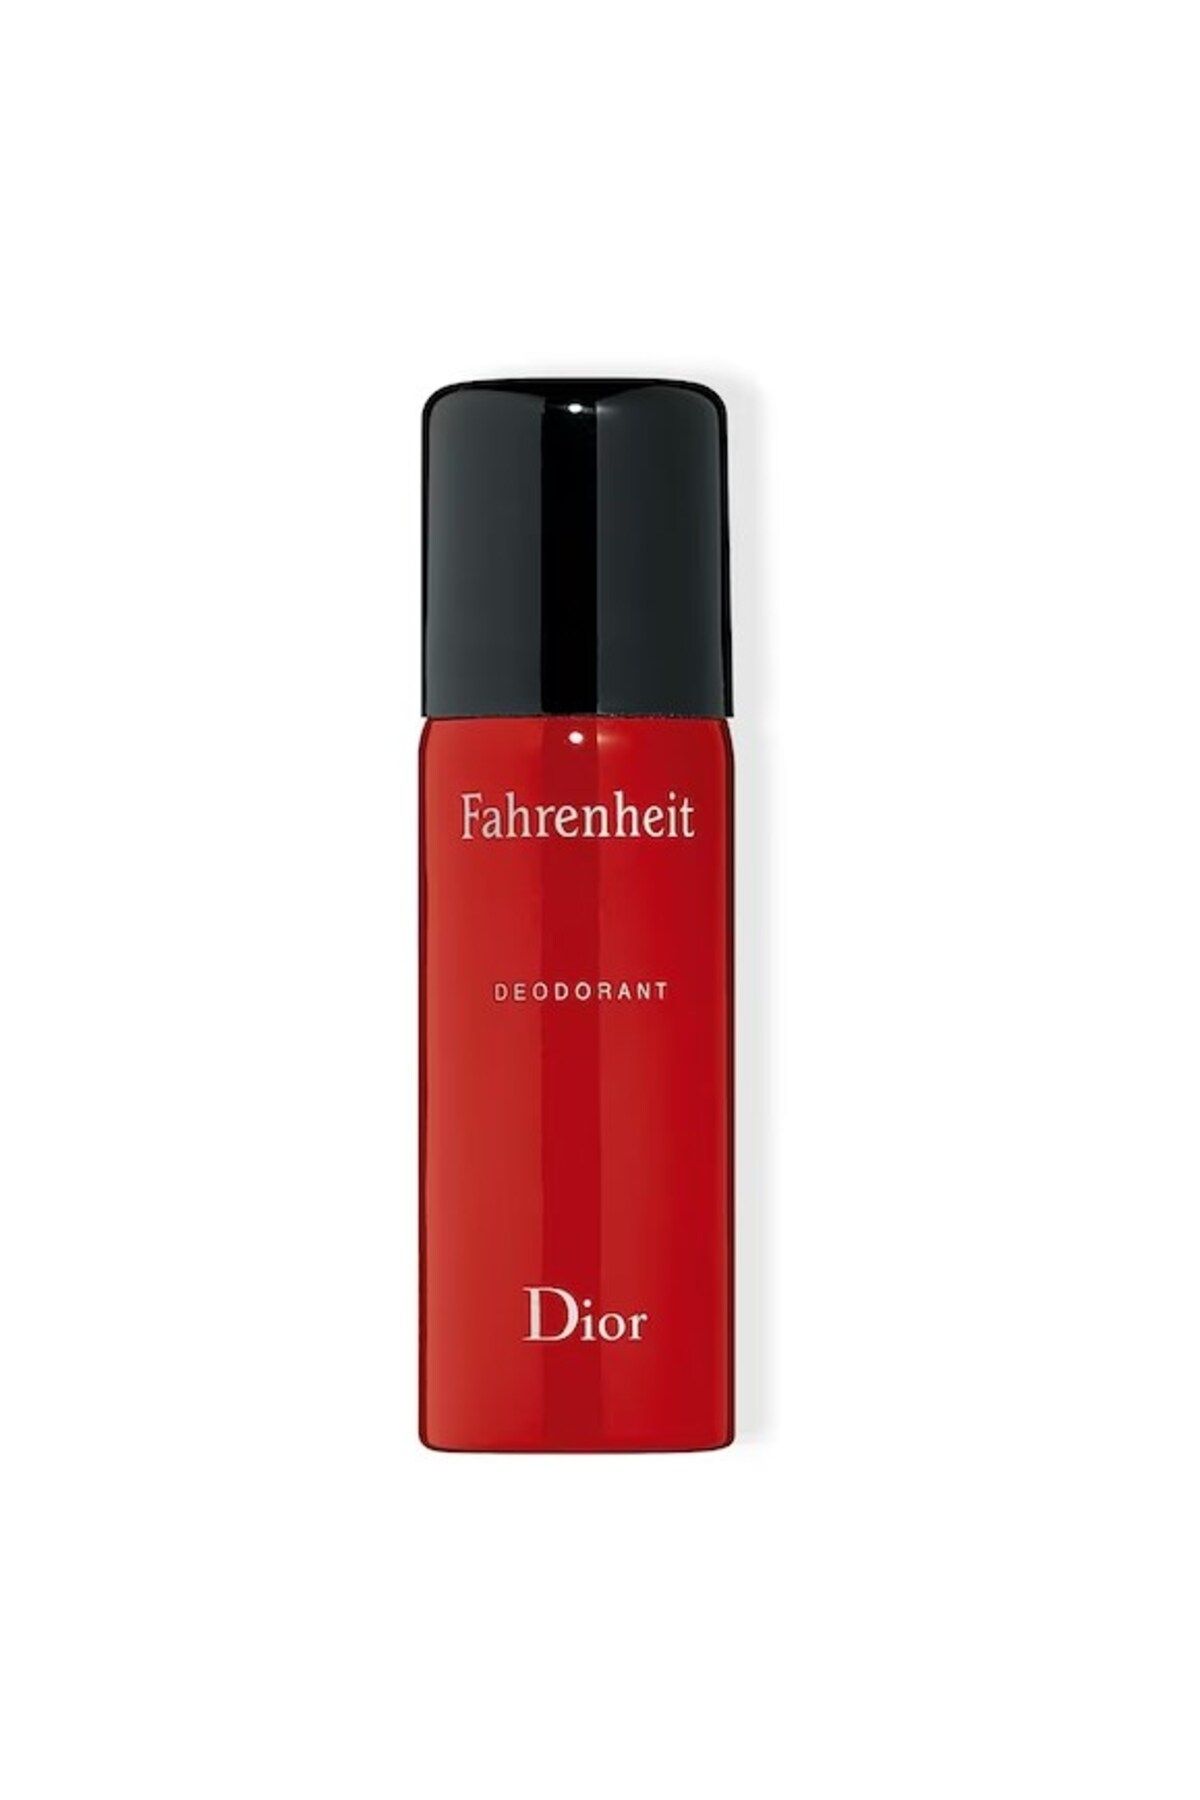 Dior Fahrenheit - Deodorant 150 Ml